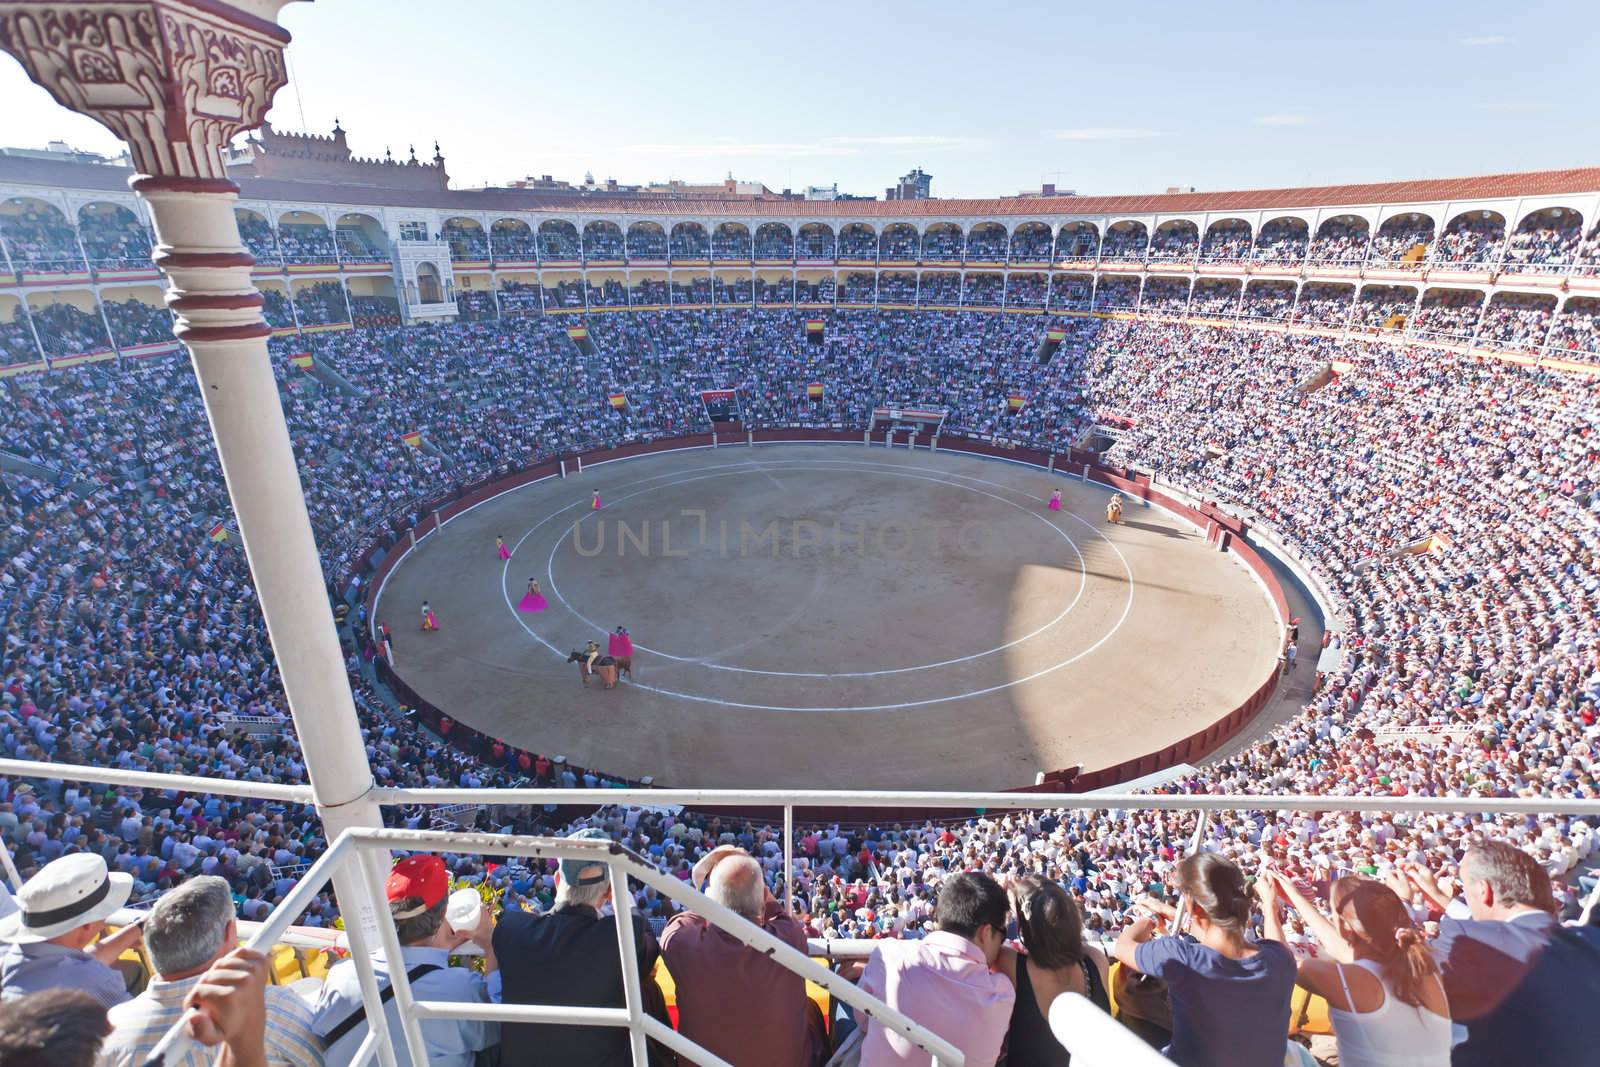 Famous bullfighting arena - Plaza de Toros in Madrid by gary718